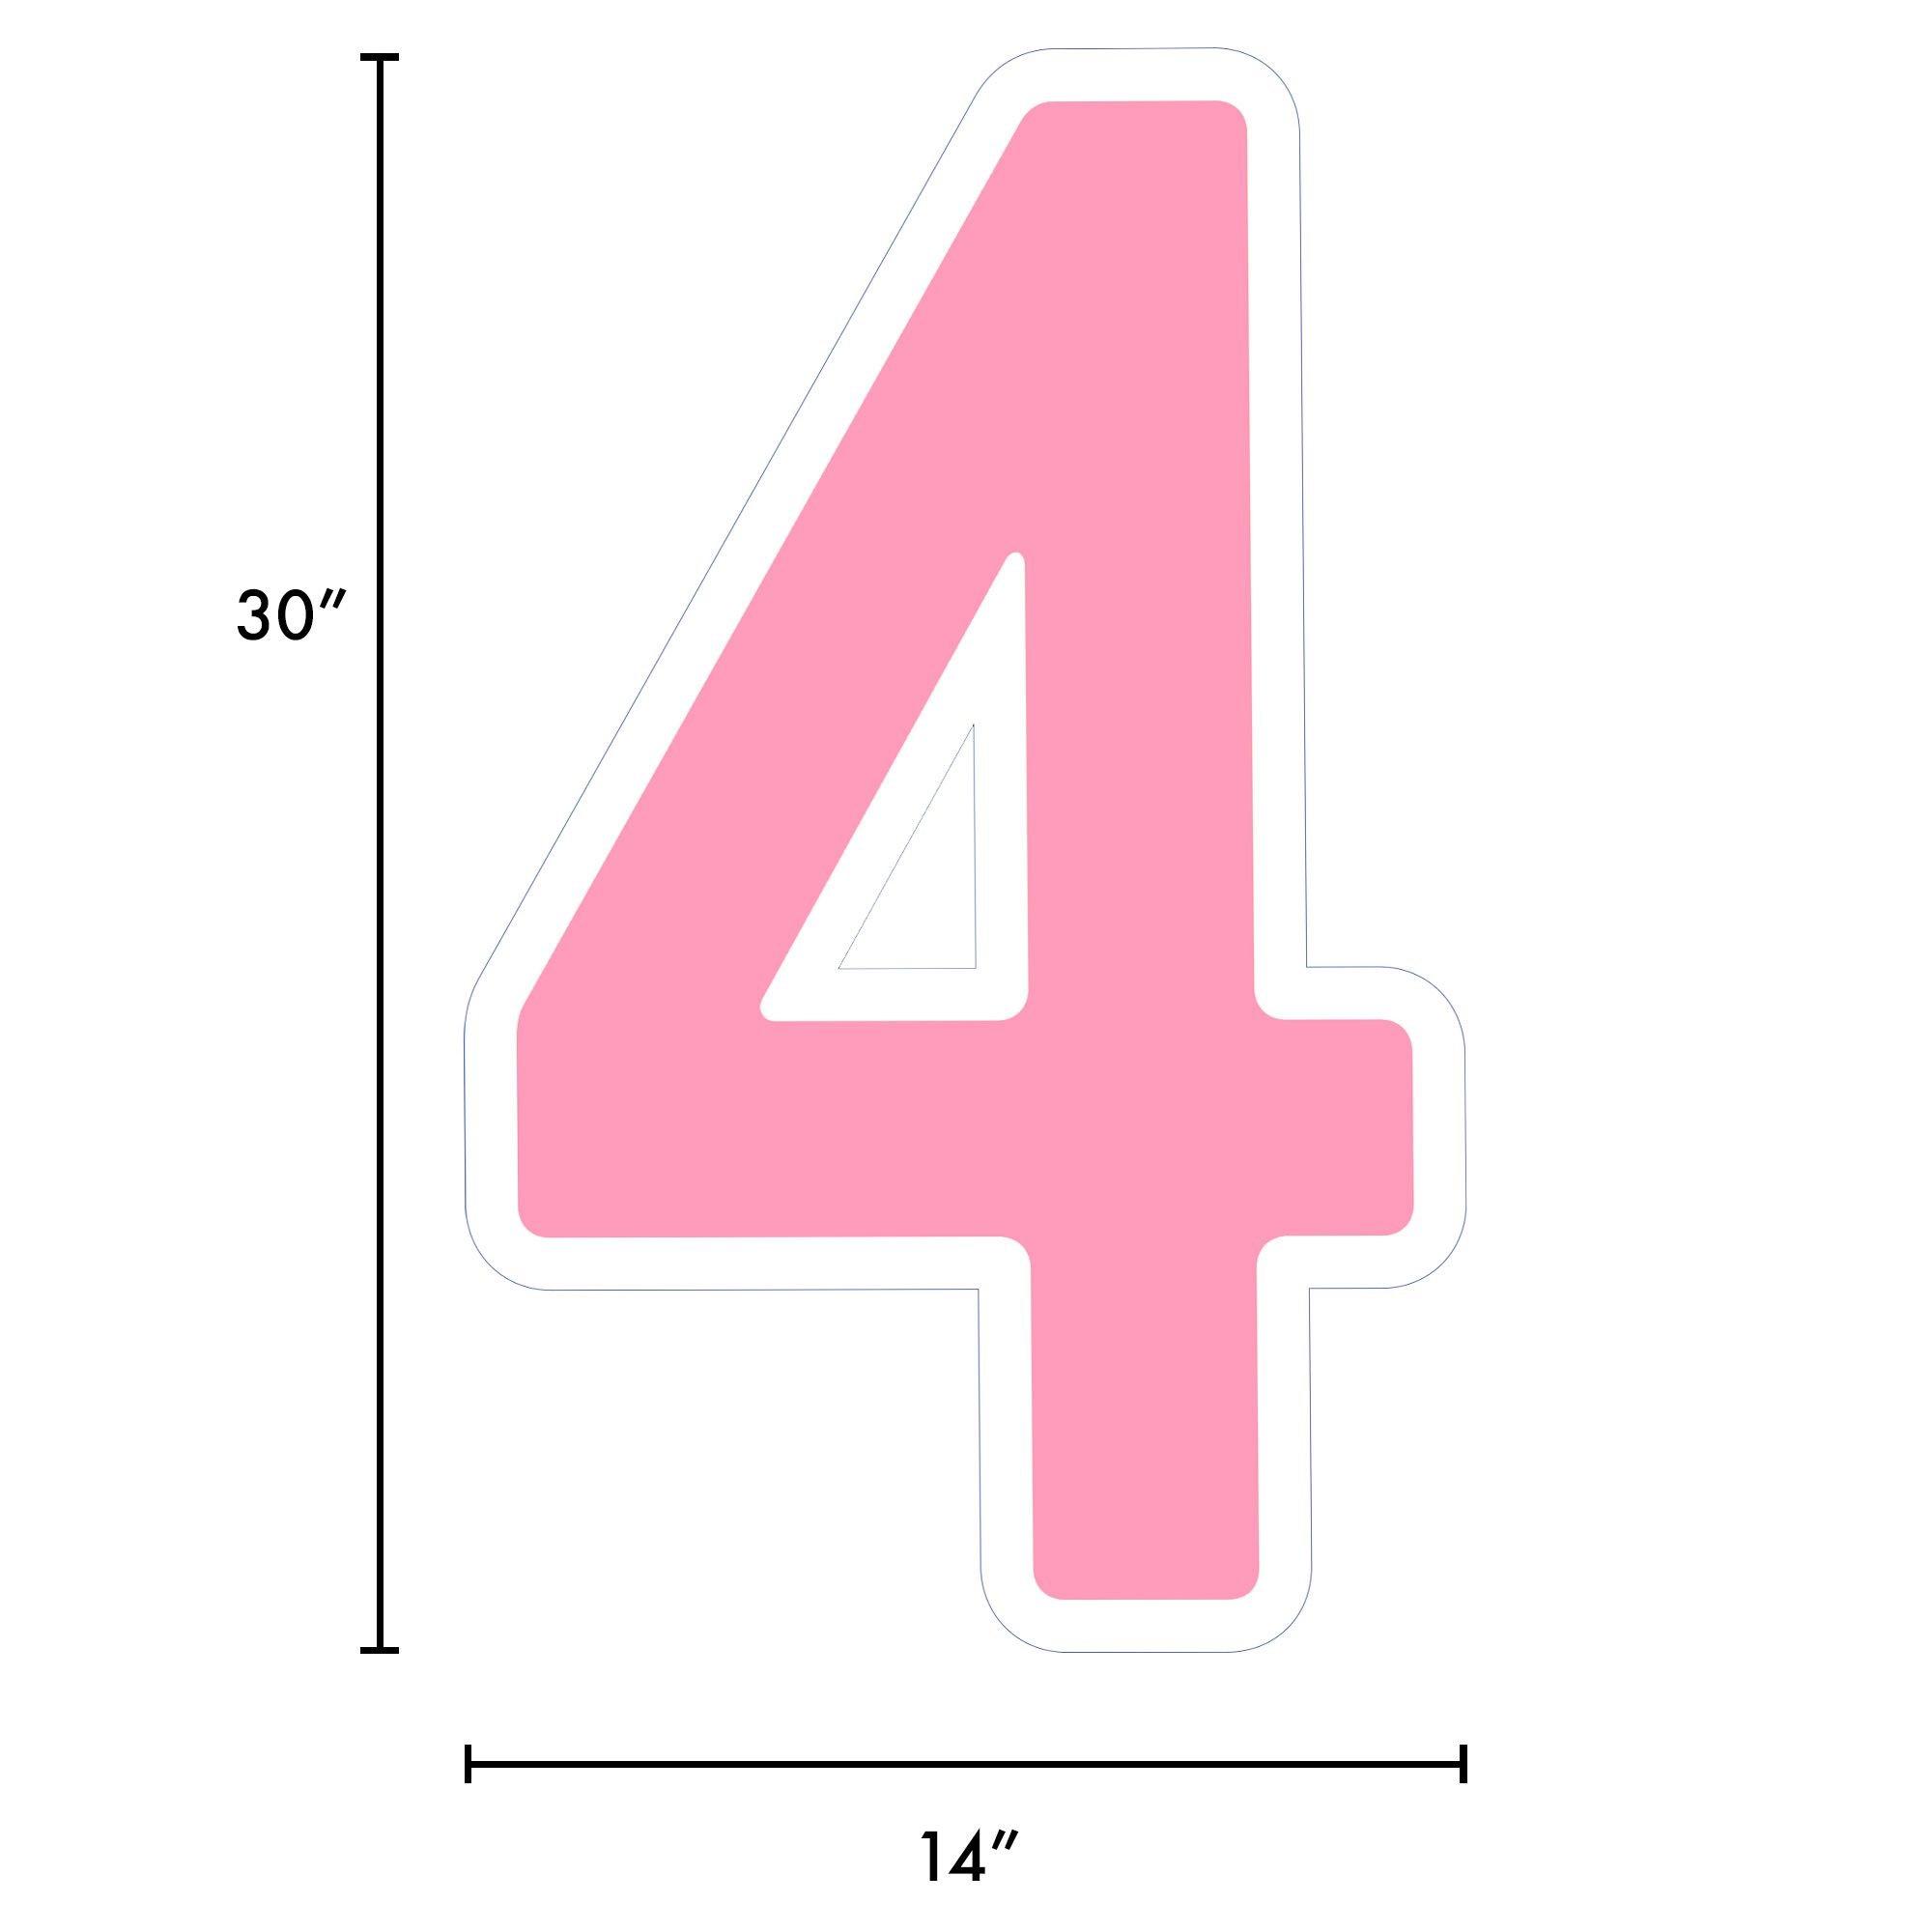 number 14 pink